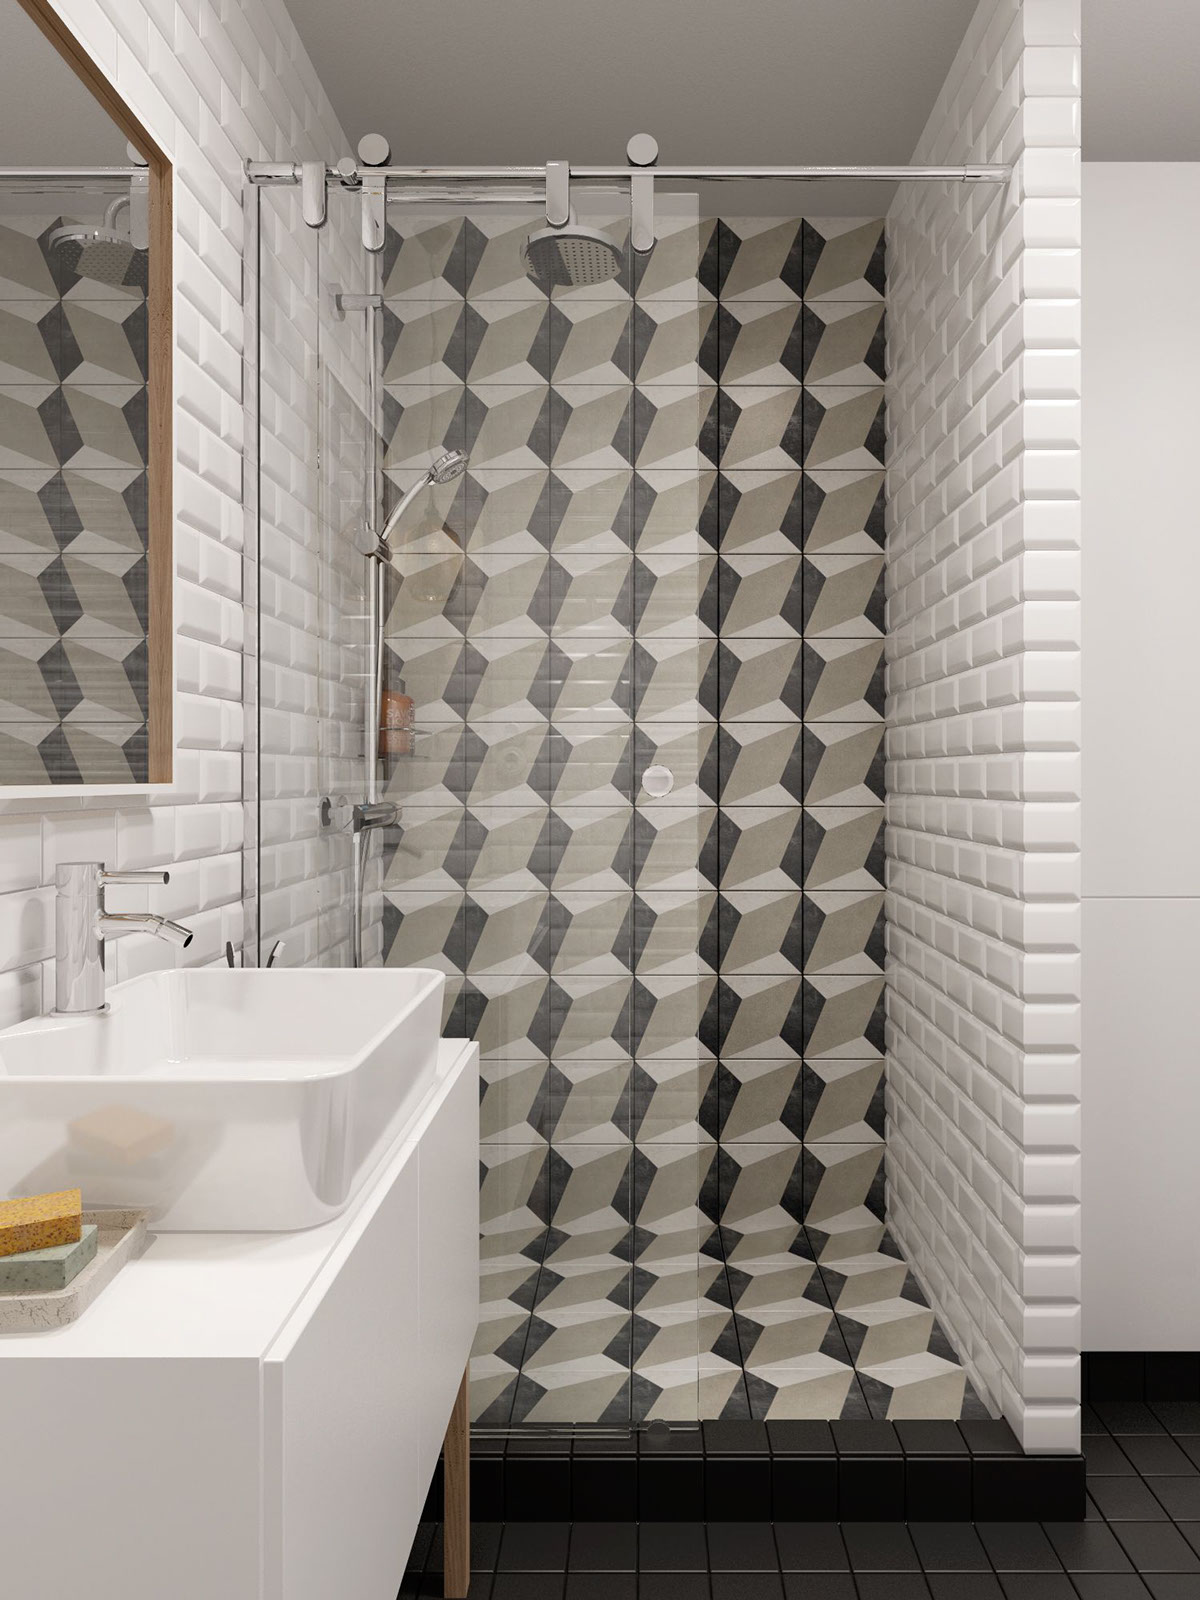 backsplash bad design "width =" 1200 "height =" 1600 "srcset =" https://mileray.com/wp-content/uploads/2020/05/1588516442_277_Scandinavian-Bathroom-Design-Ideas-With-White-Color-Shade-Which-Can.jpg 1200w, https://mileray.com/ wp-content / uploads / 2016/09 / INT2-Architecture1-225x300.jpg 225w, https://mileray.com/wp-content/uploads/2016/09/INT2-Architecture1-768x1024.jpg 768w, https: // mileray.com/wp-content/uploads/2016/09/INT2-Architecture1-696x928.jpg 696w, https://mileray.com/wp-content/uploads/2016/09/INT2-Architecture1-1068x1424.jpg 1068w, https://mileray.com/wp-content/uploads/2016/09/INT2-Architecture1-315x420.jpg 315w "sizes =" (maximum width: 1200px) 100vw, 1200px